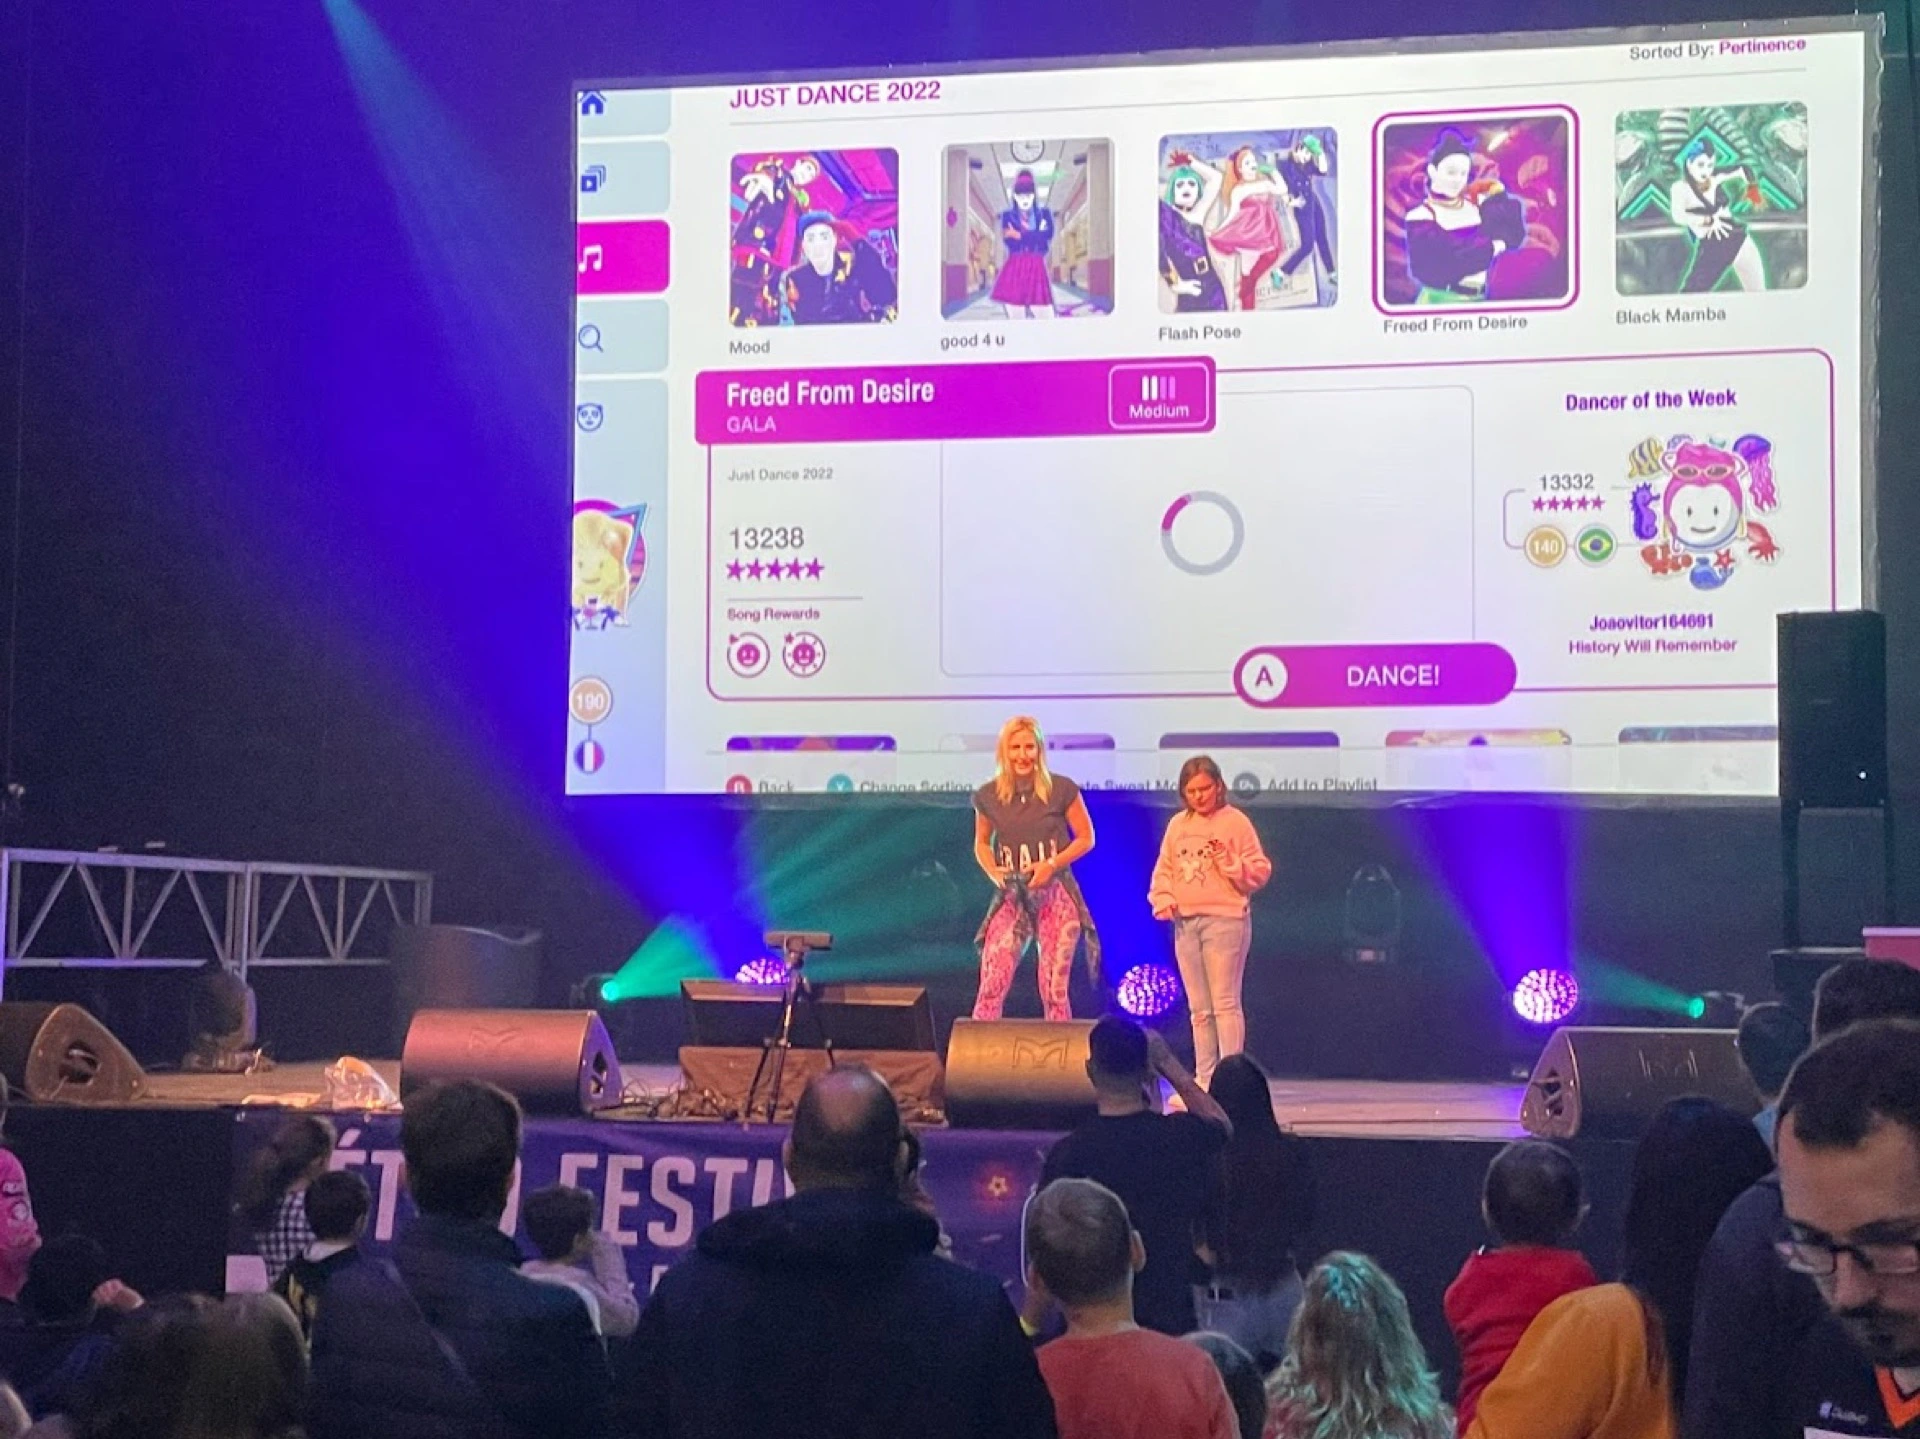 Cosplay Retro Game festival 2022